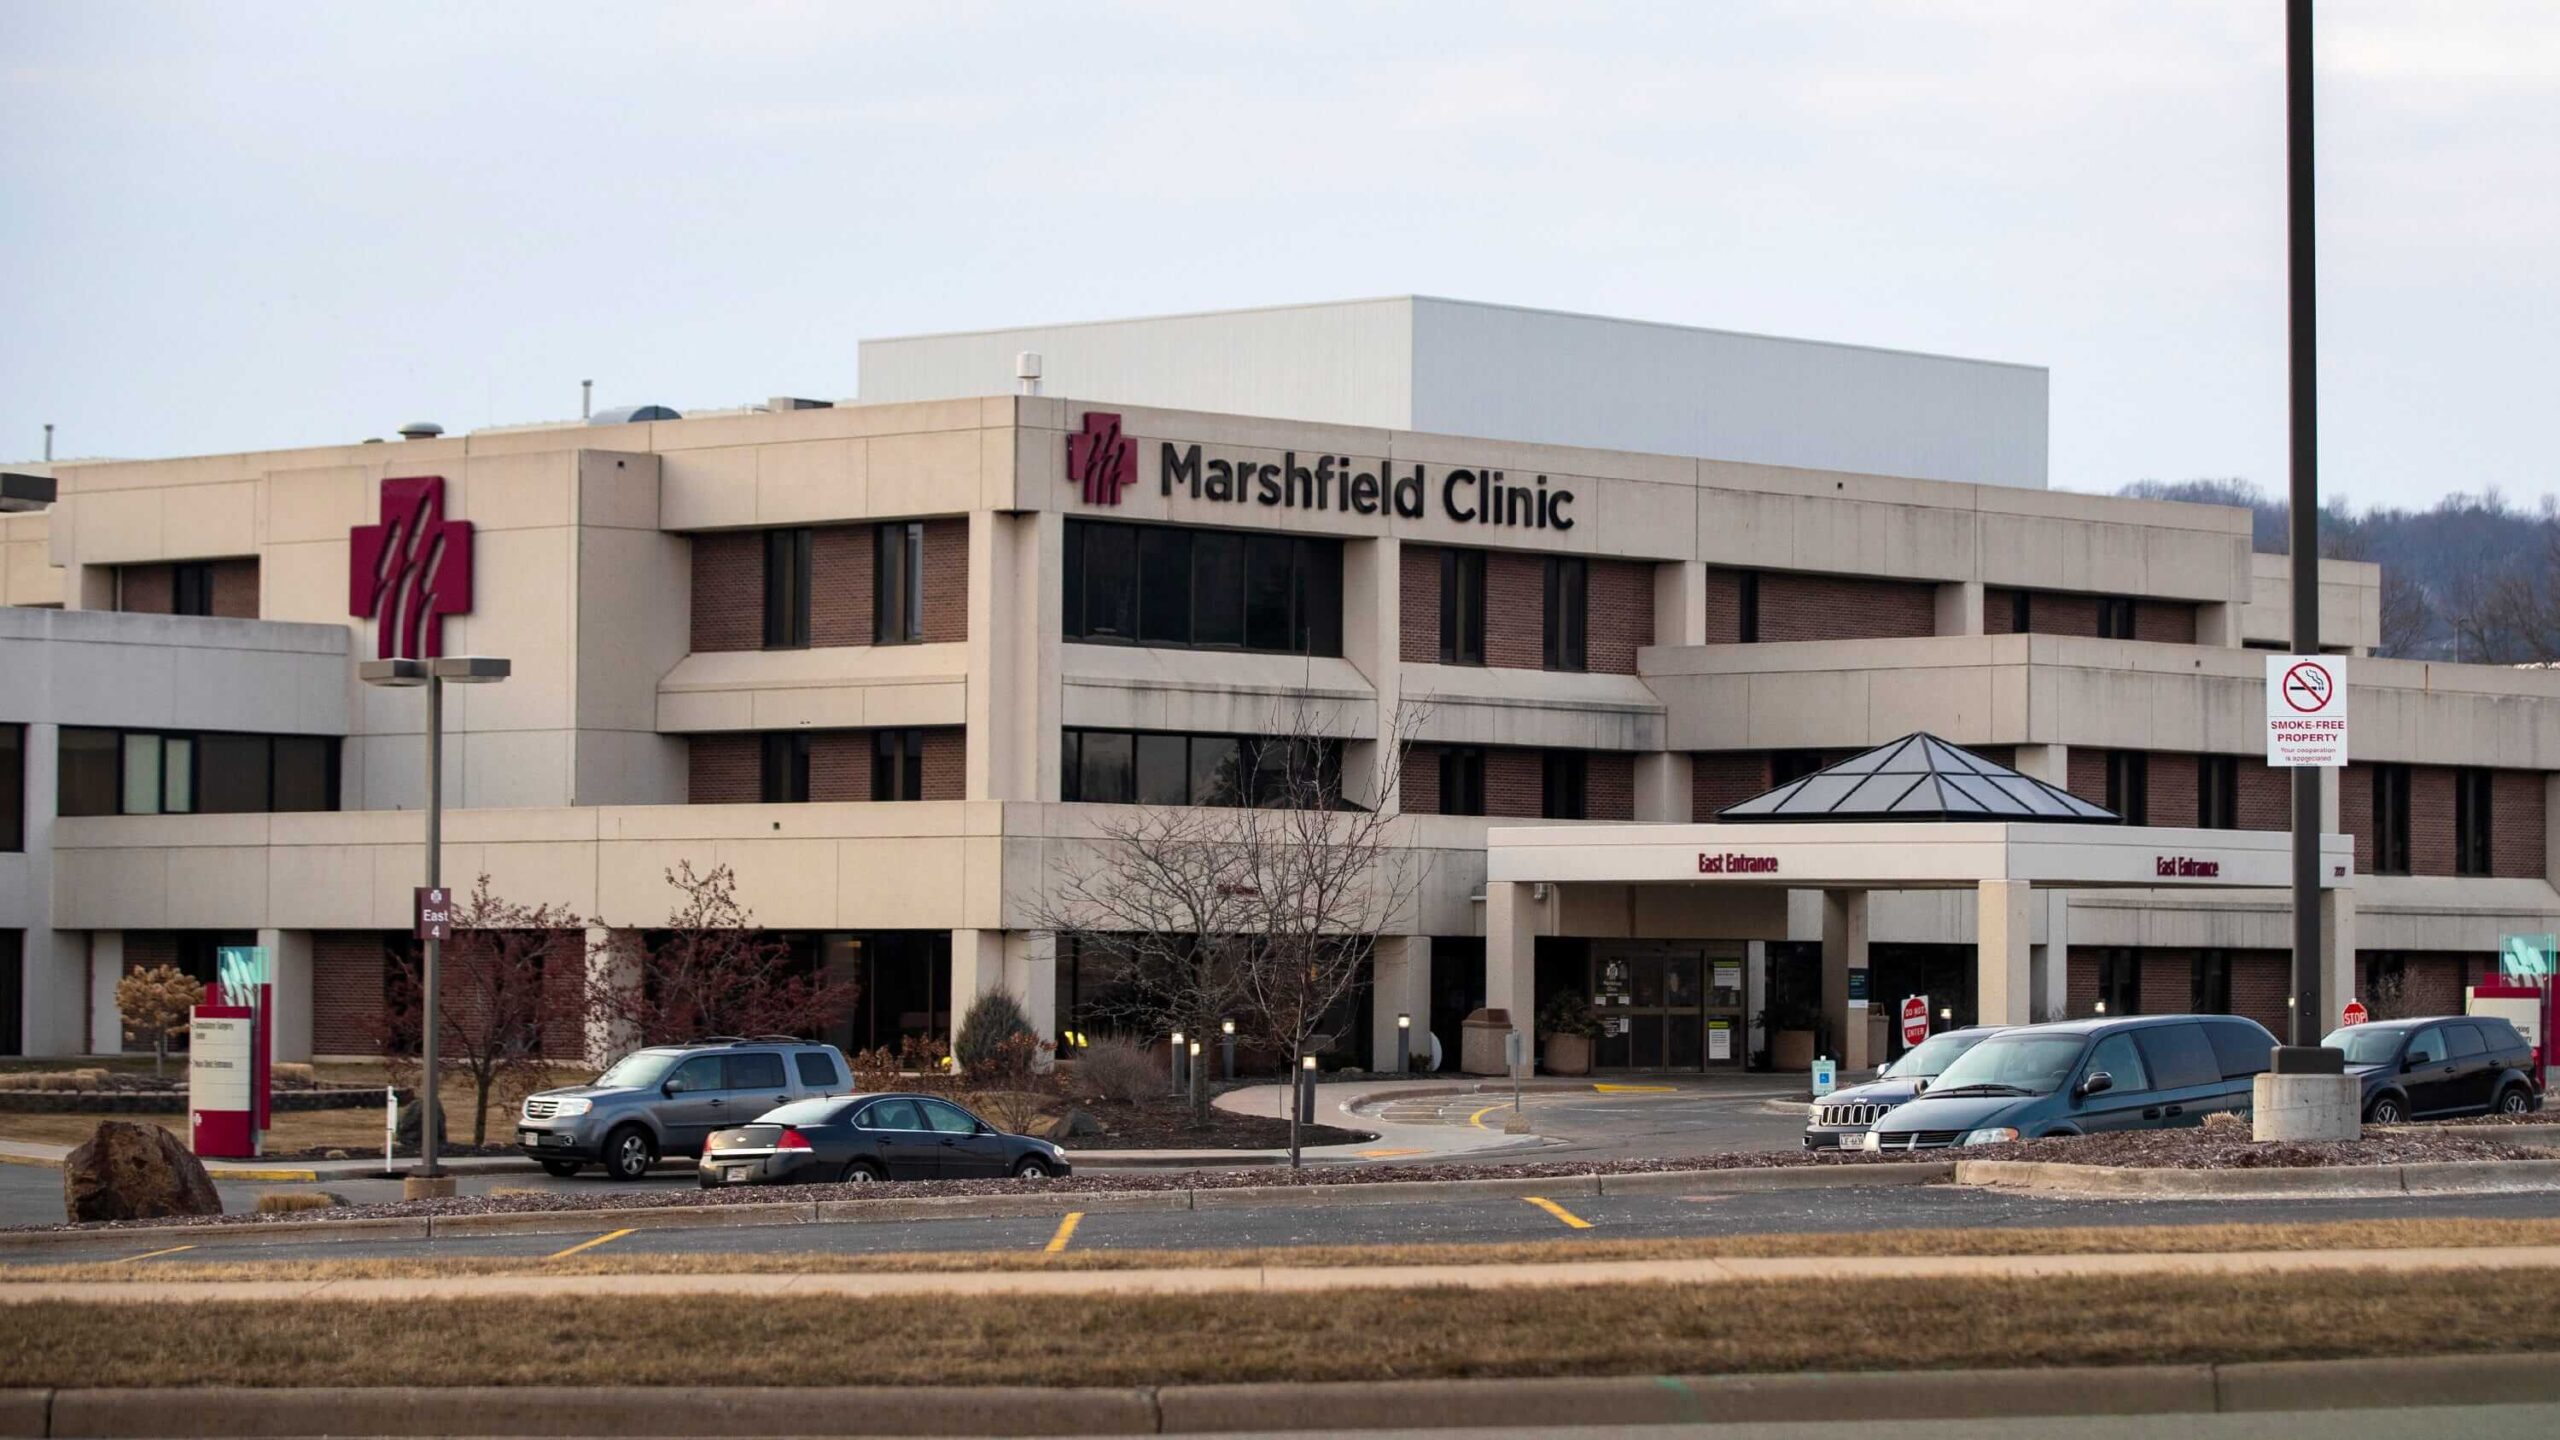 Mymarshfieldclinic - My Marshfield Clinic Login